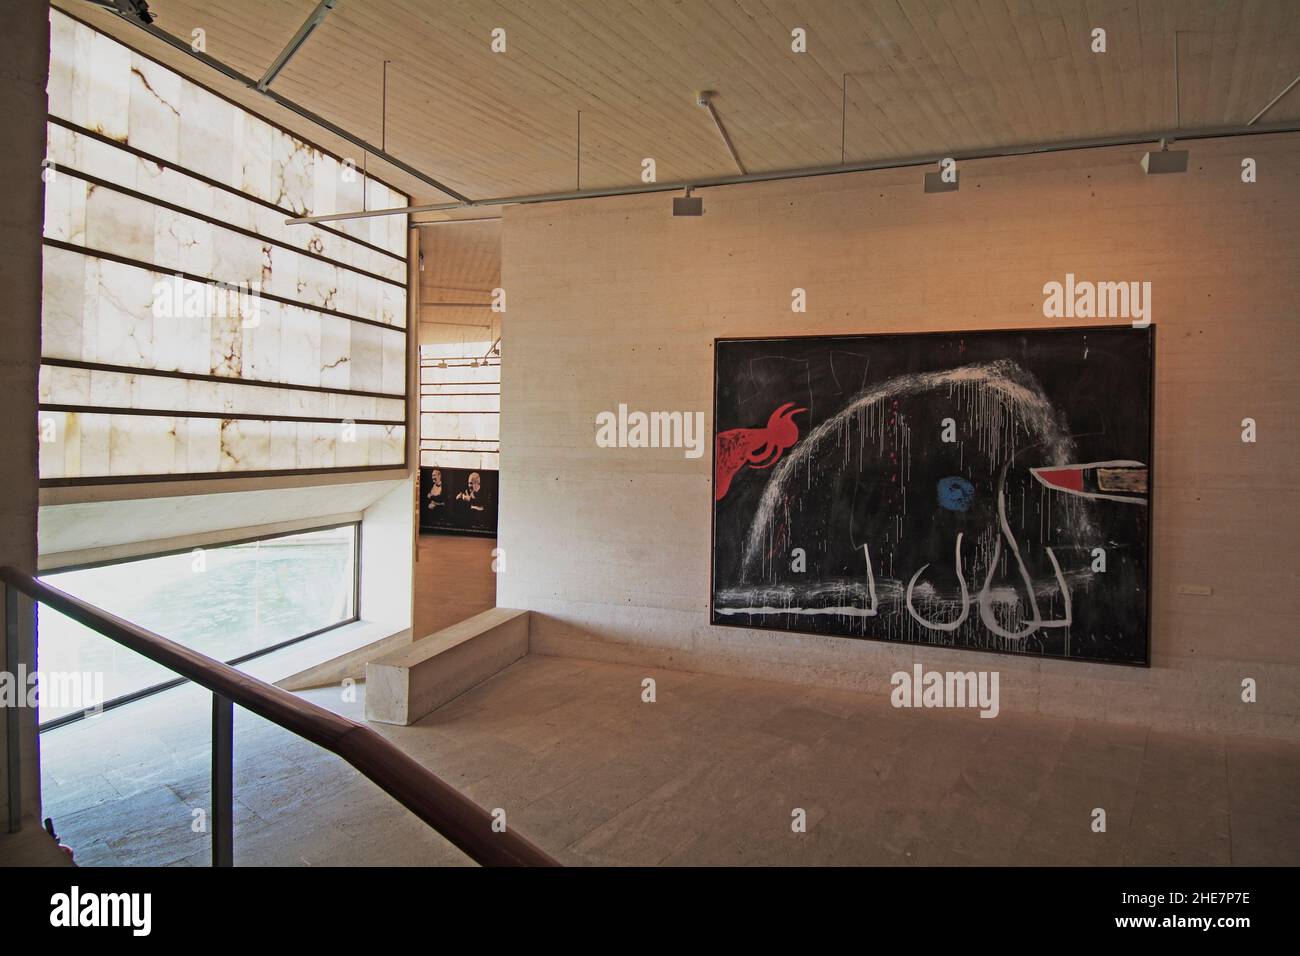 Miró Museum, Pilar i Joan Miró-Stiftung, Museumsgebäude von Rafael Moneo, Bild 'ohne Titel' Ölmalerei, Akrylmalerei und Kreide, 270x355 cm, Palma de M Stock Photo